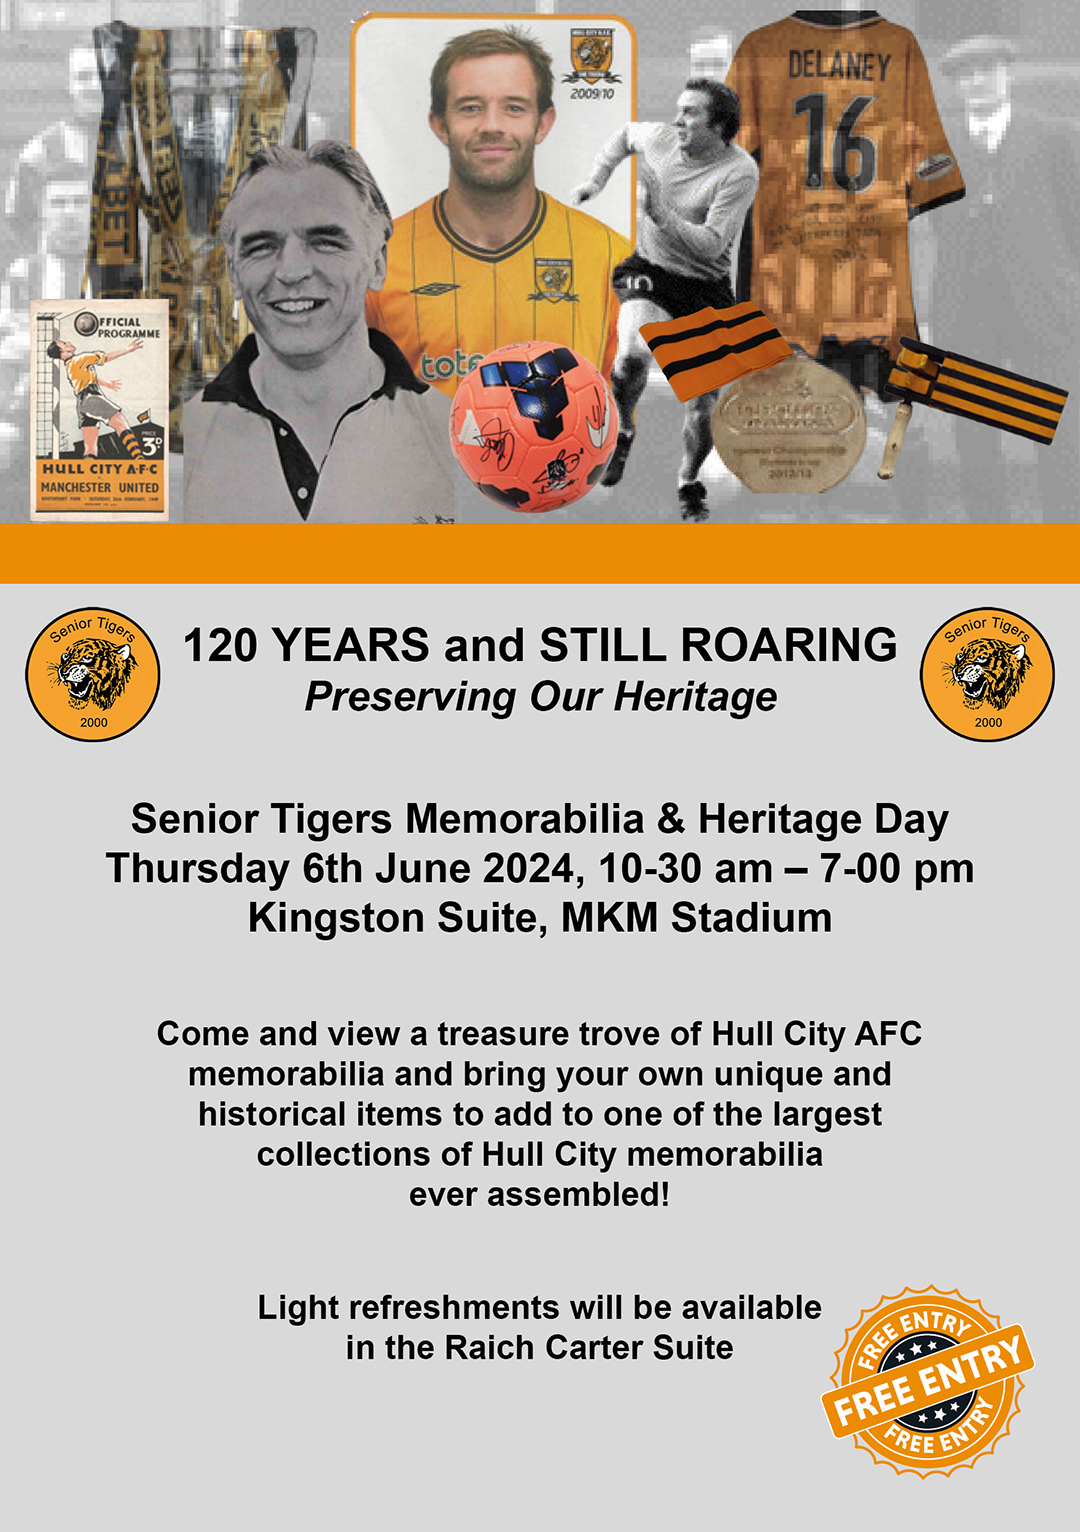 Senior Tigers Memorabilia & Heritage Day